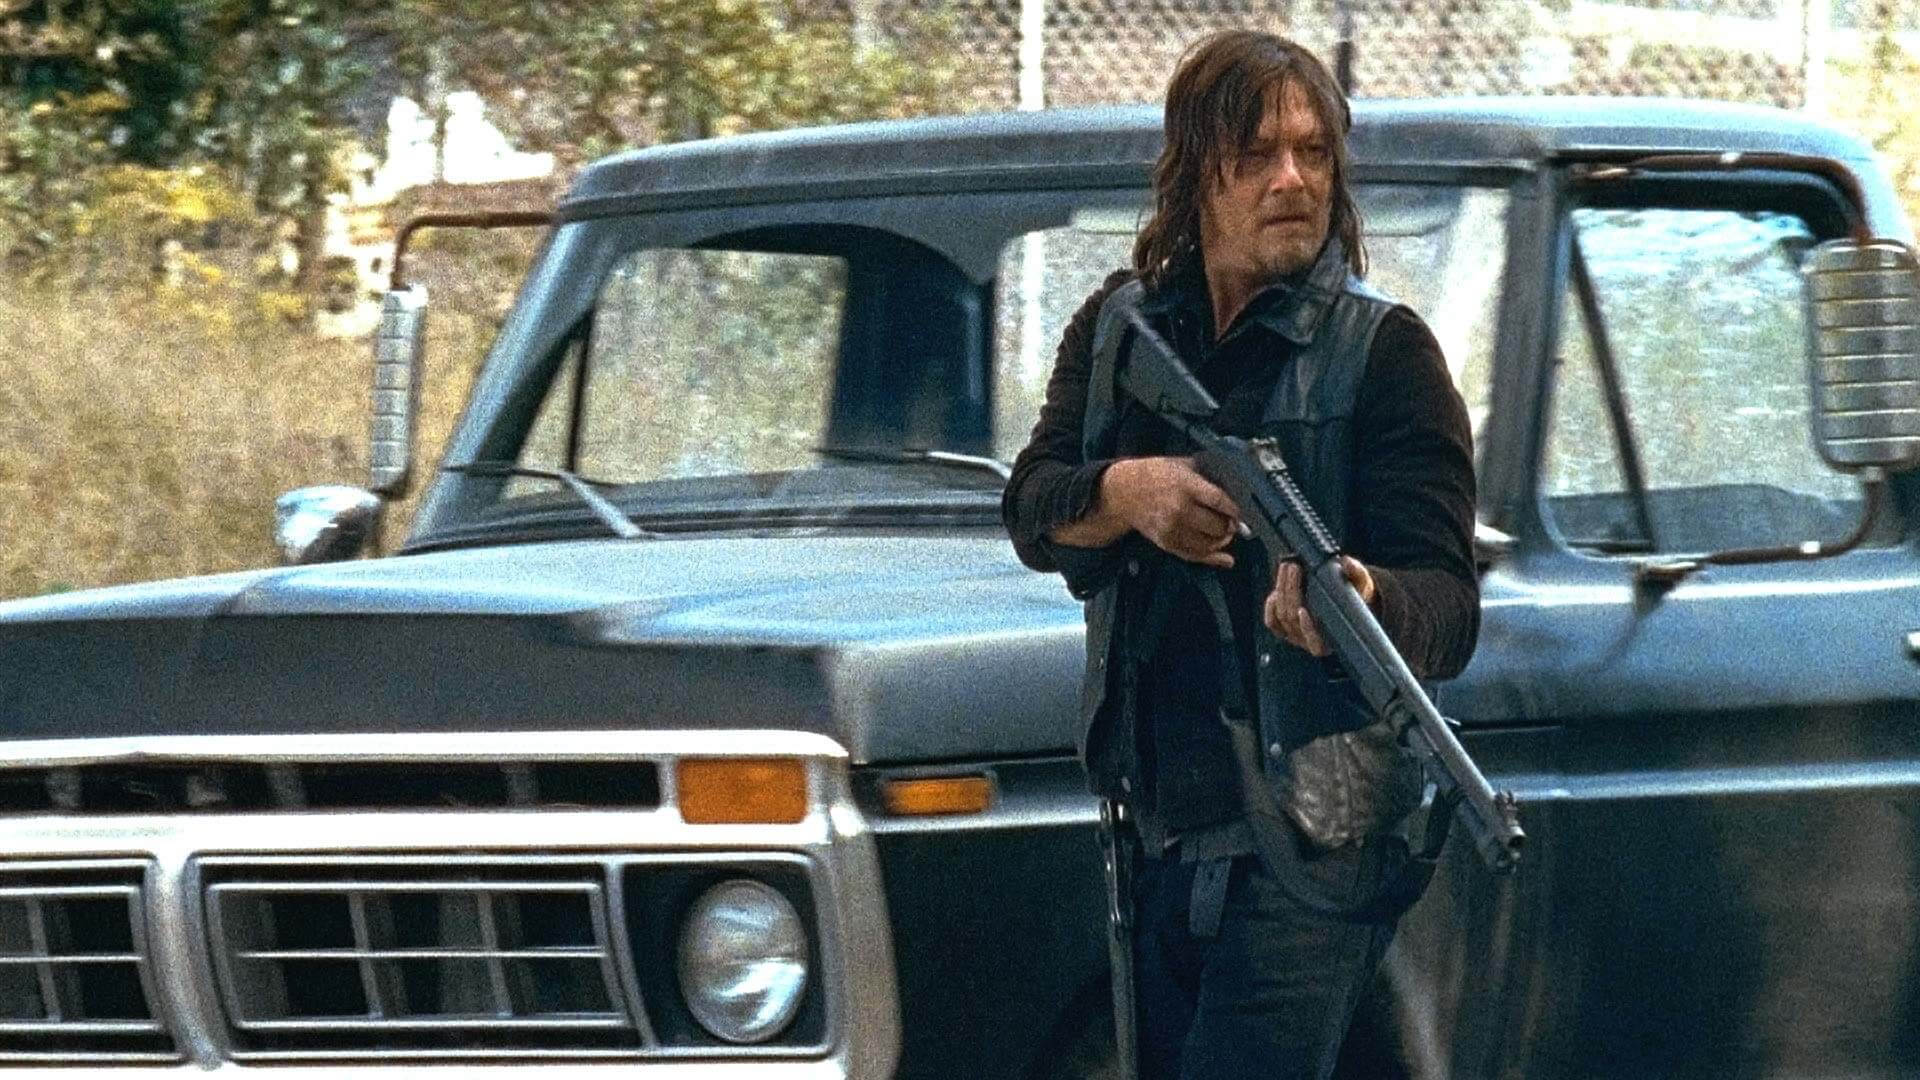 Daryl on The Walkind Dead